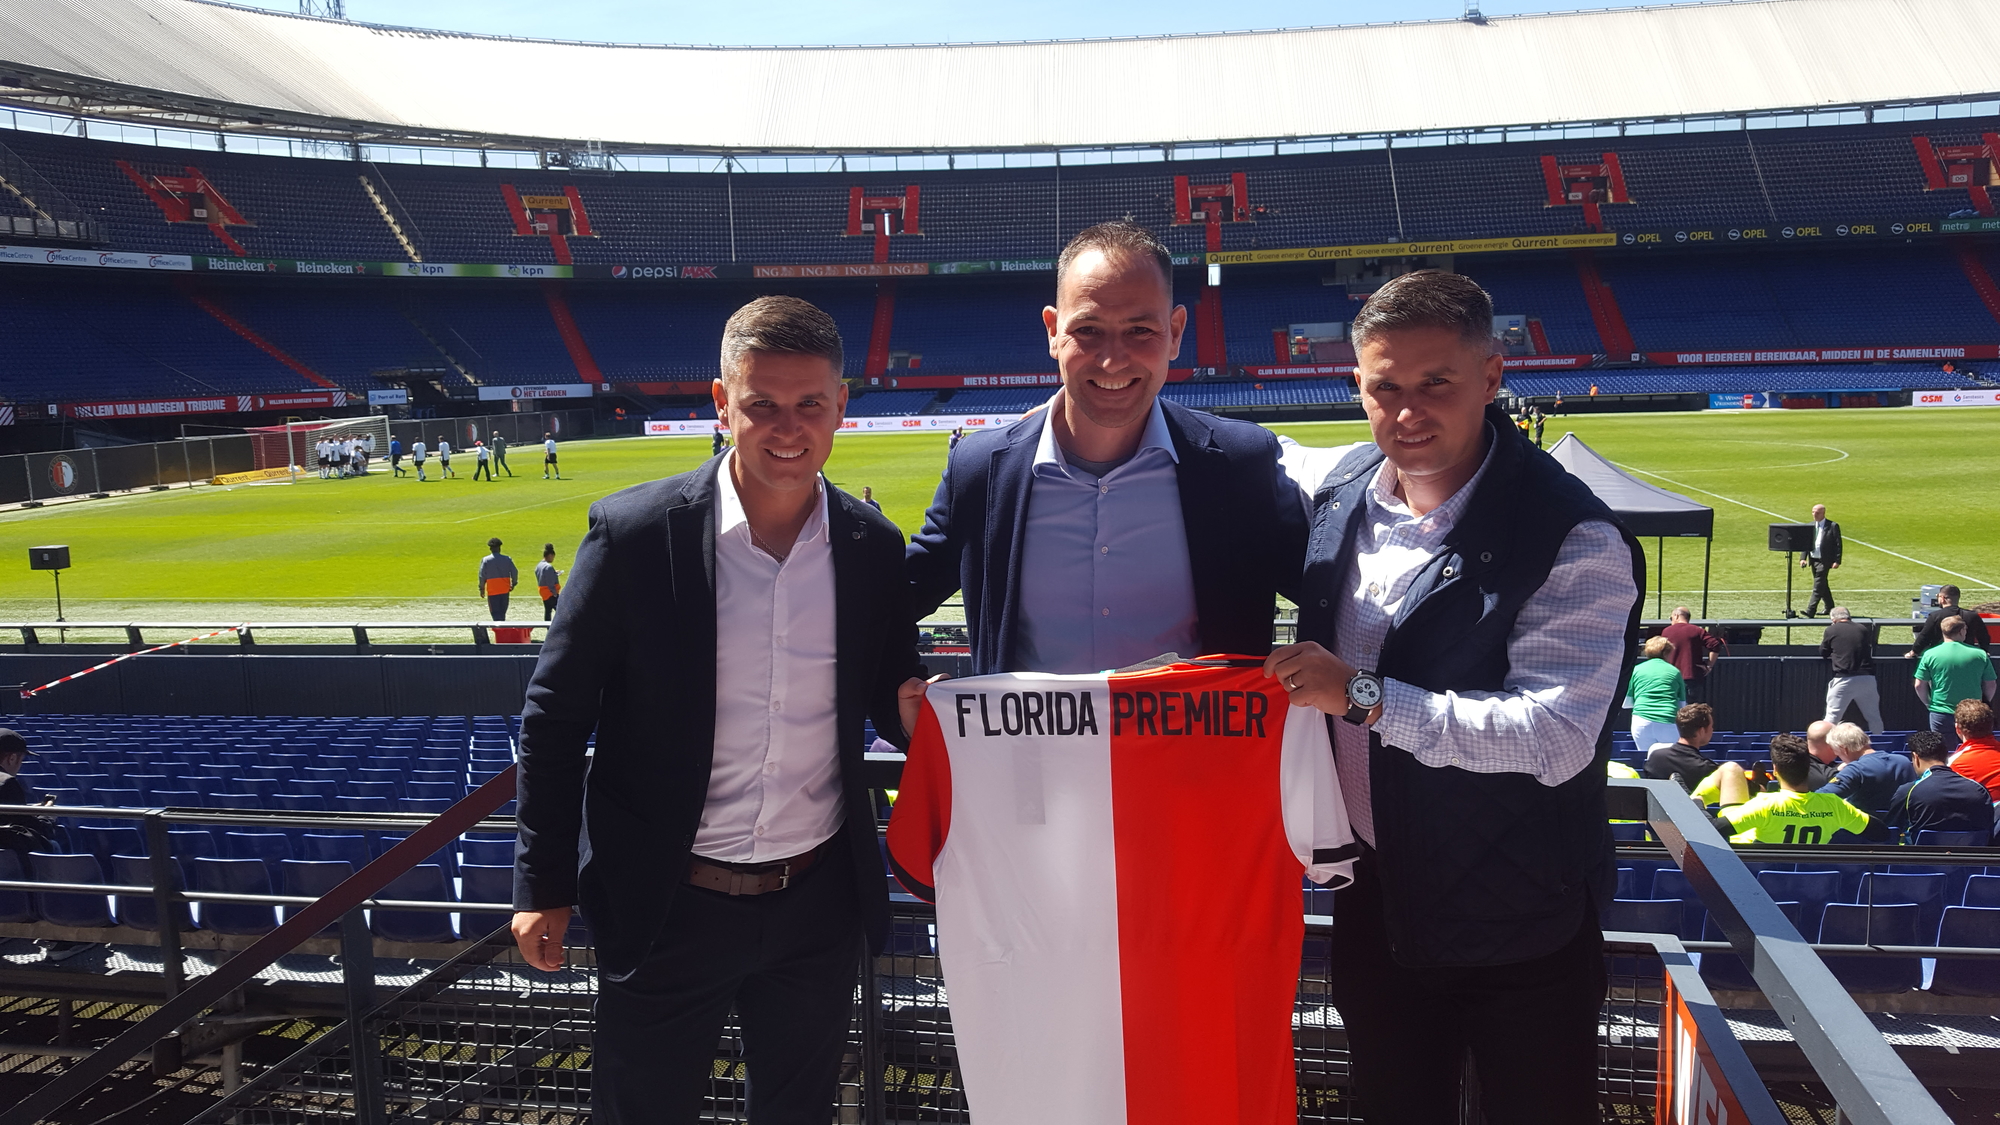 Feyenoord creates a strategic partnership in Florida